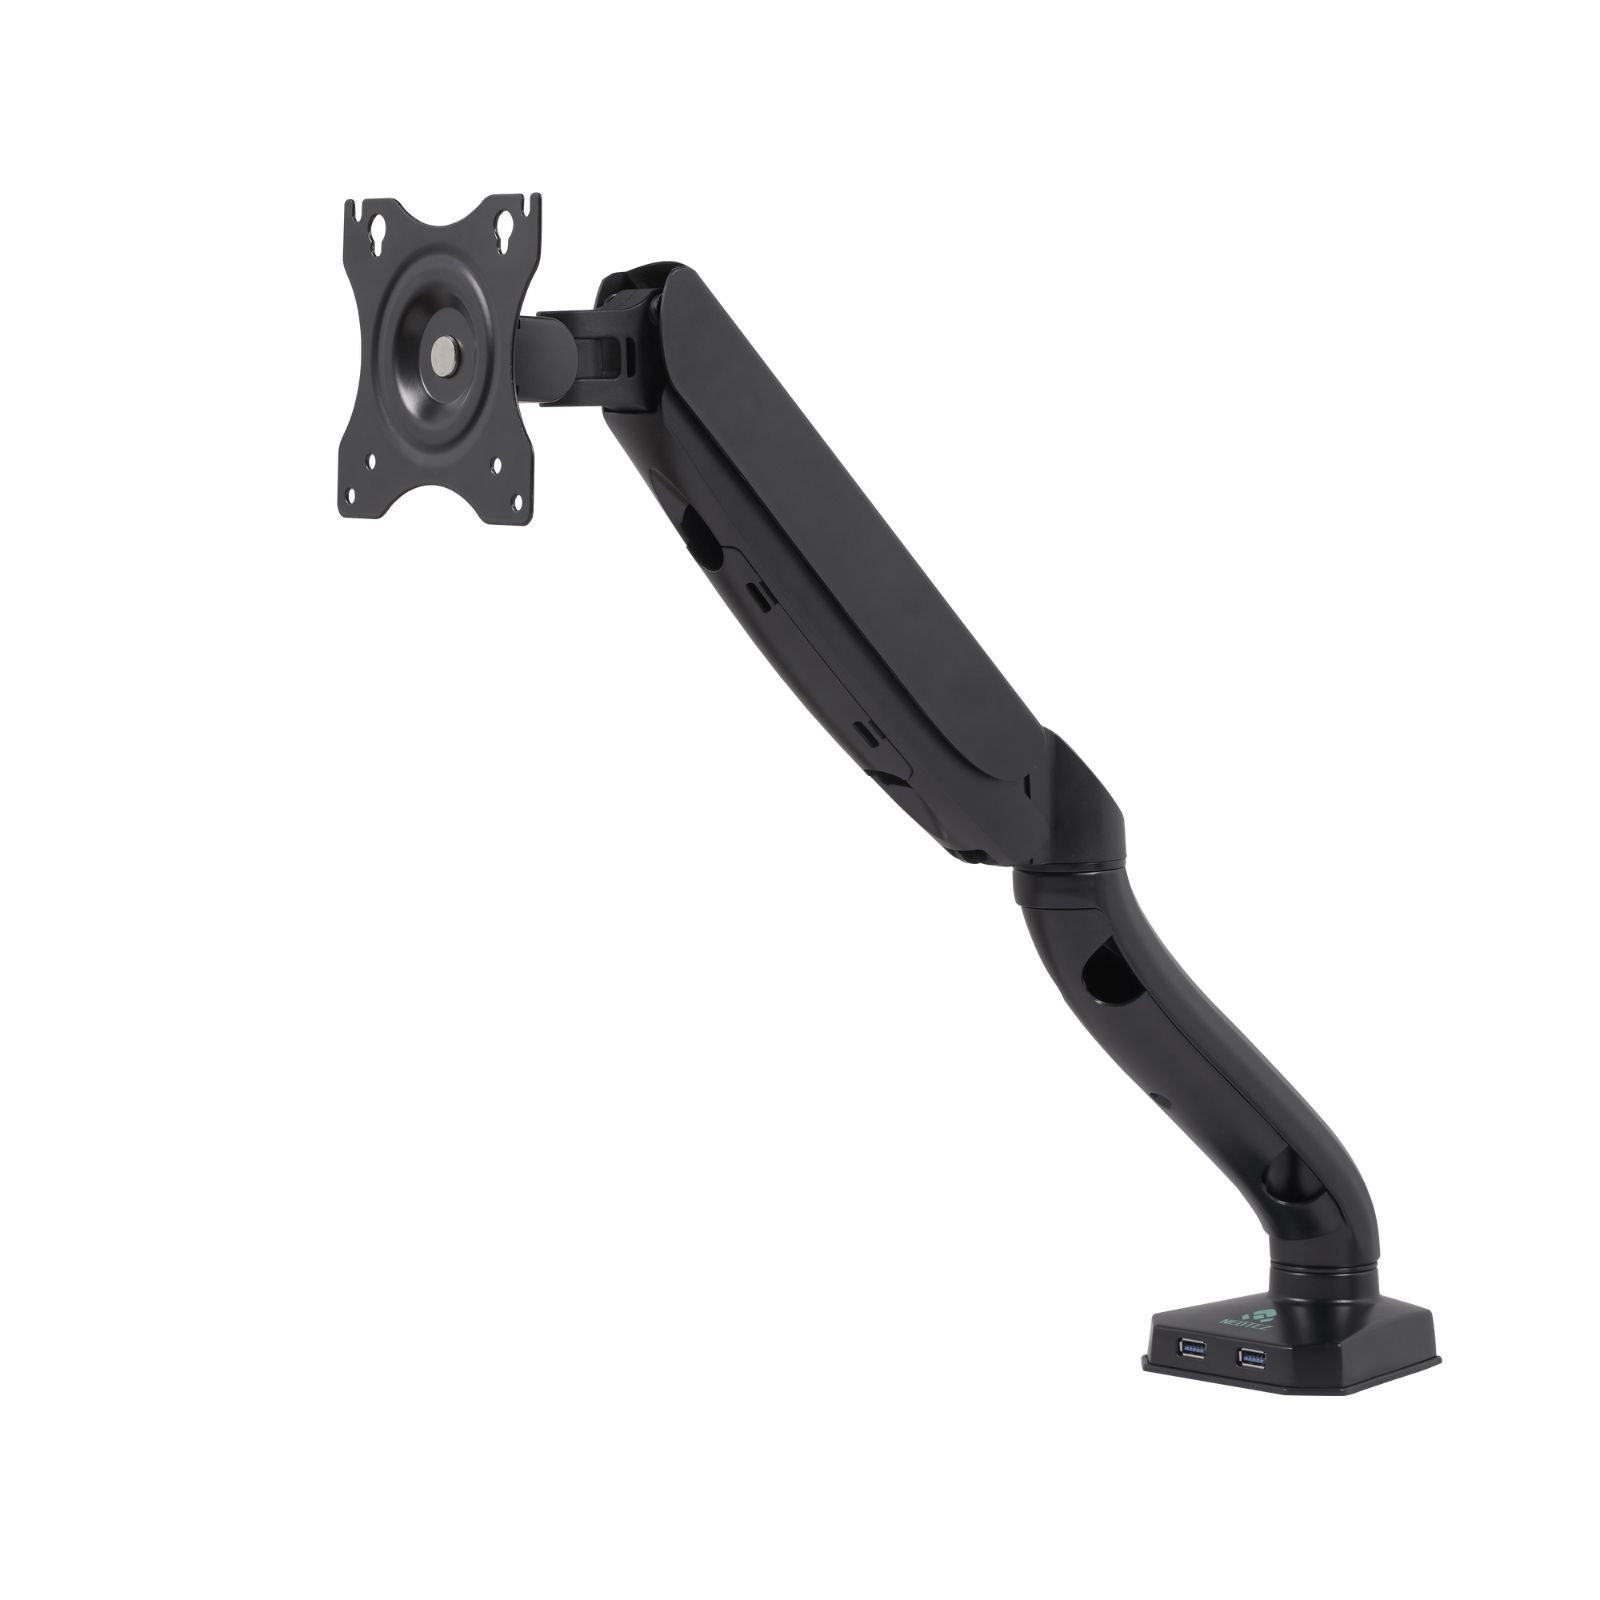 Neotez SAGITTA Pro 27" Flexible Monitor Arm